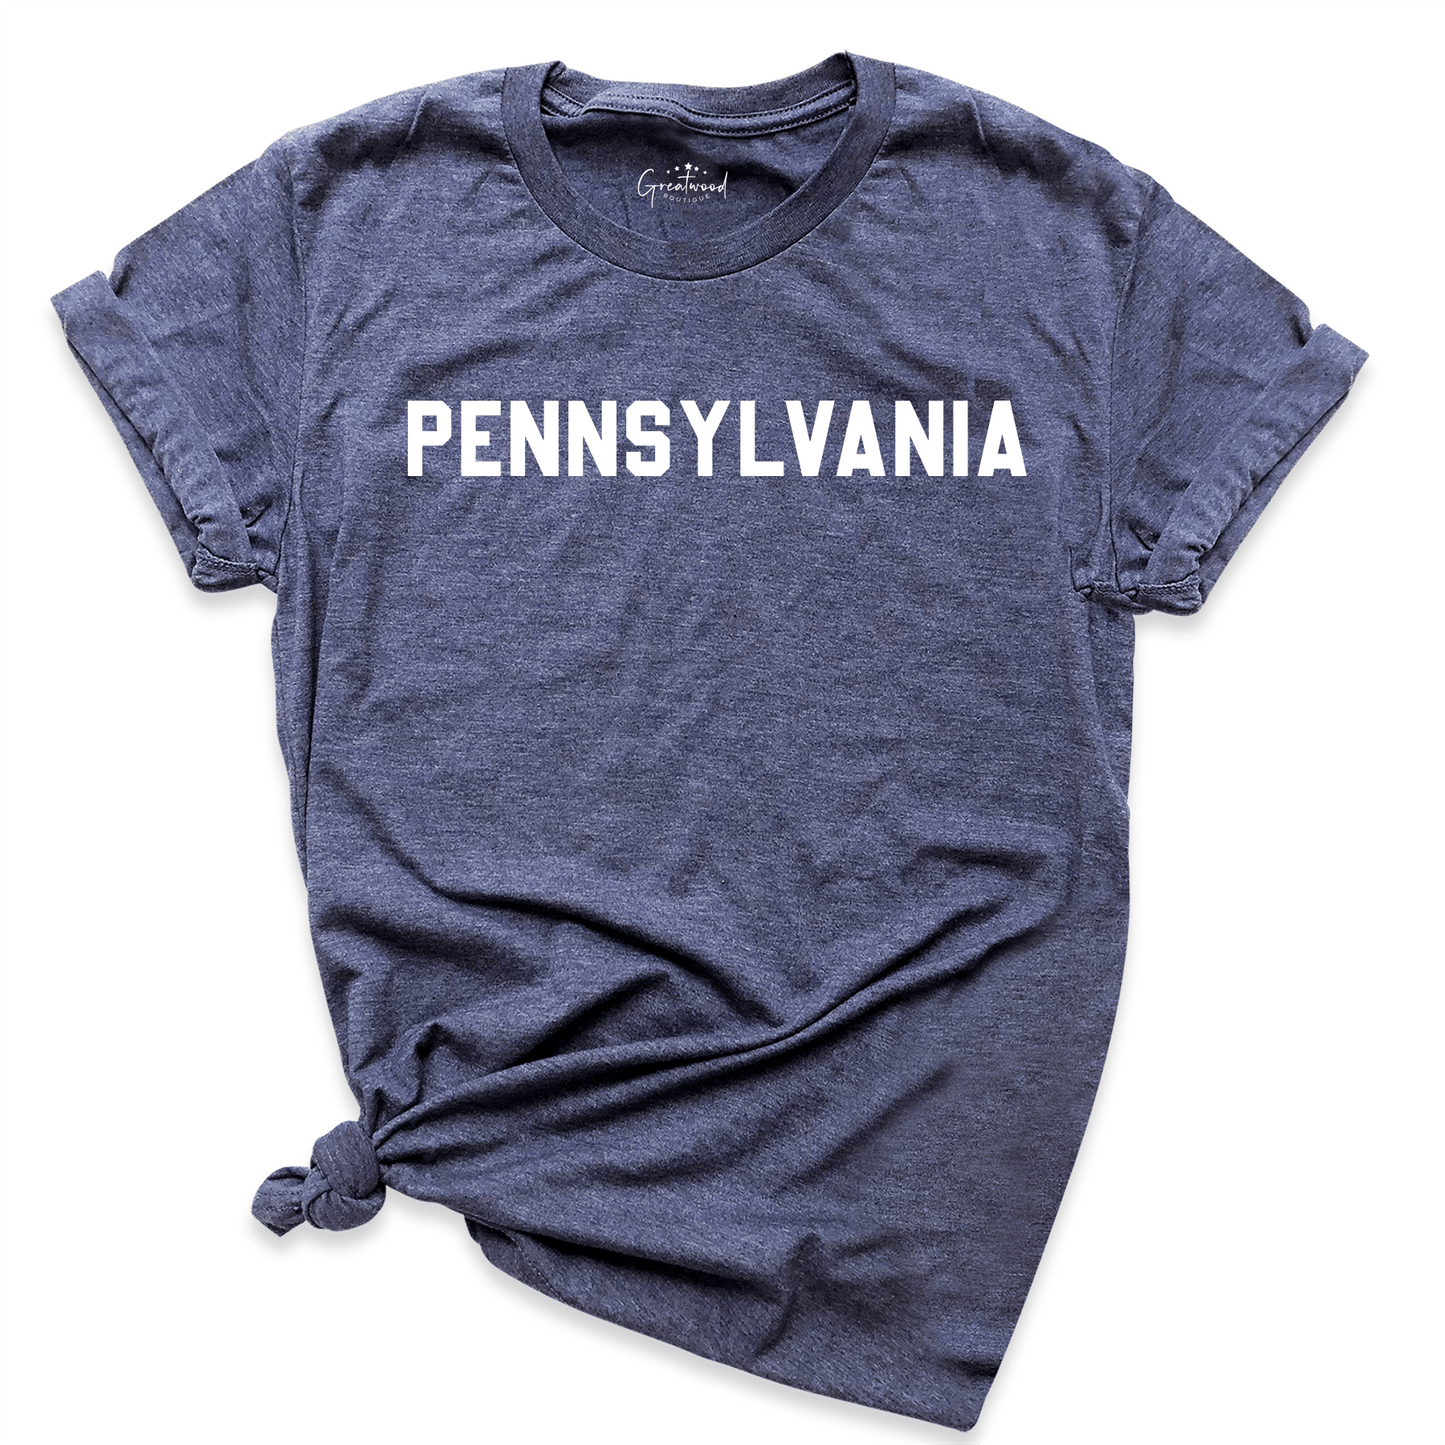 Pennsylvania Shirt